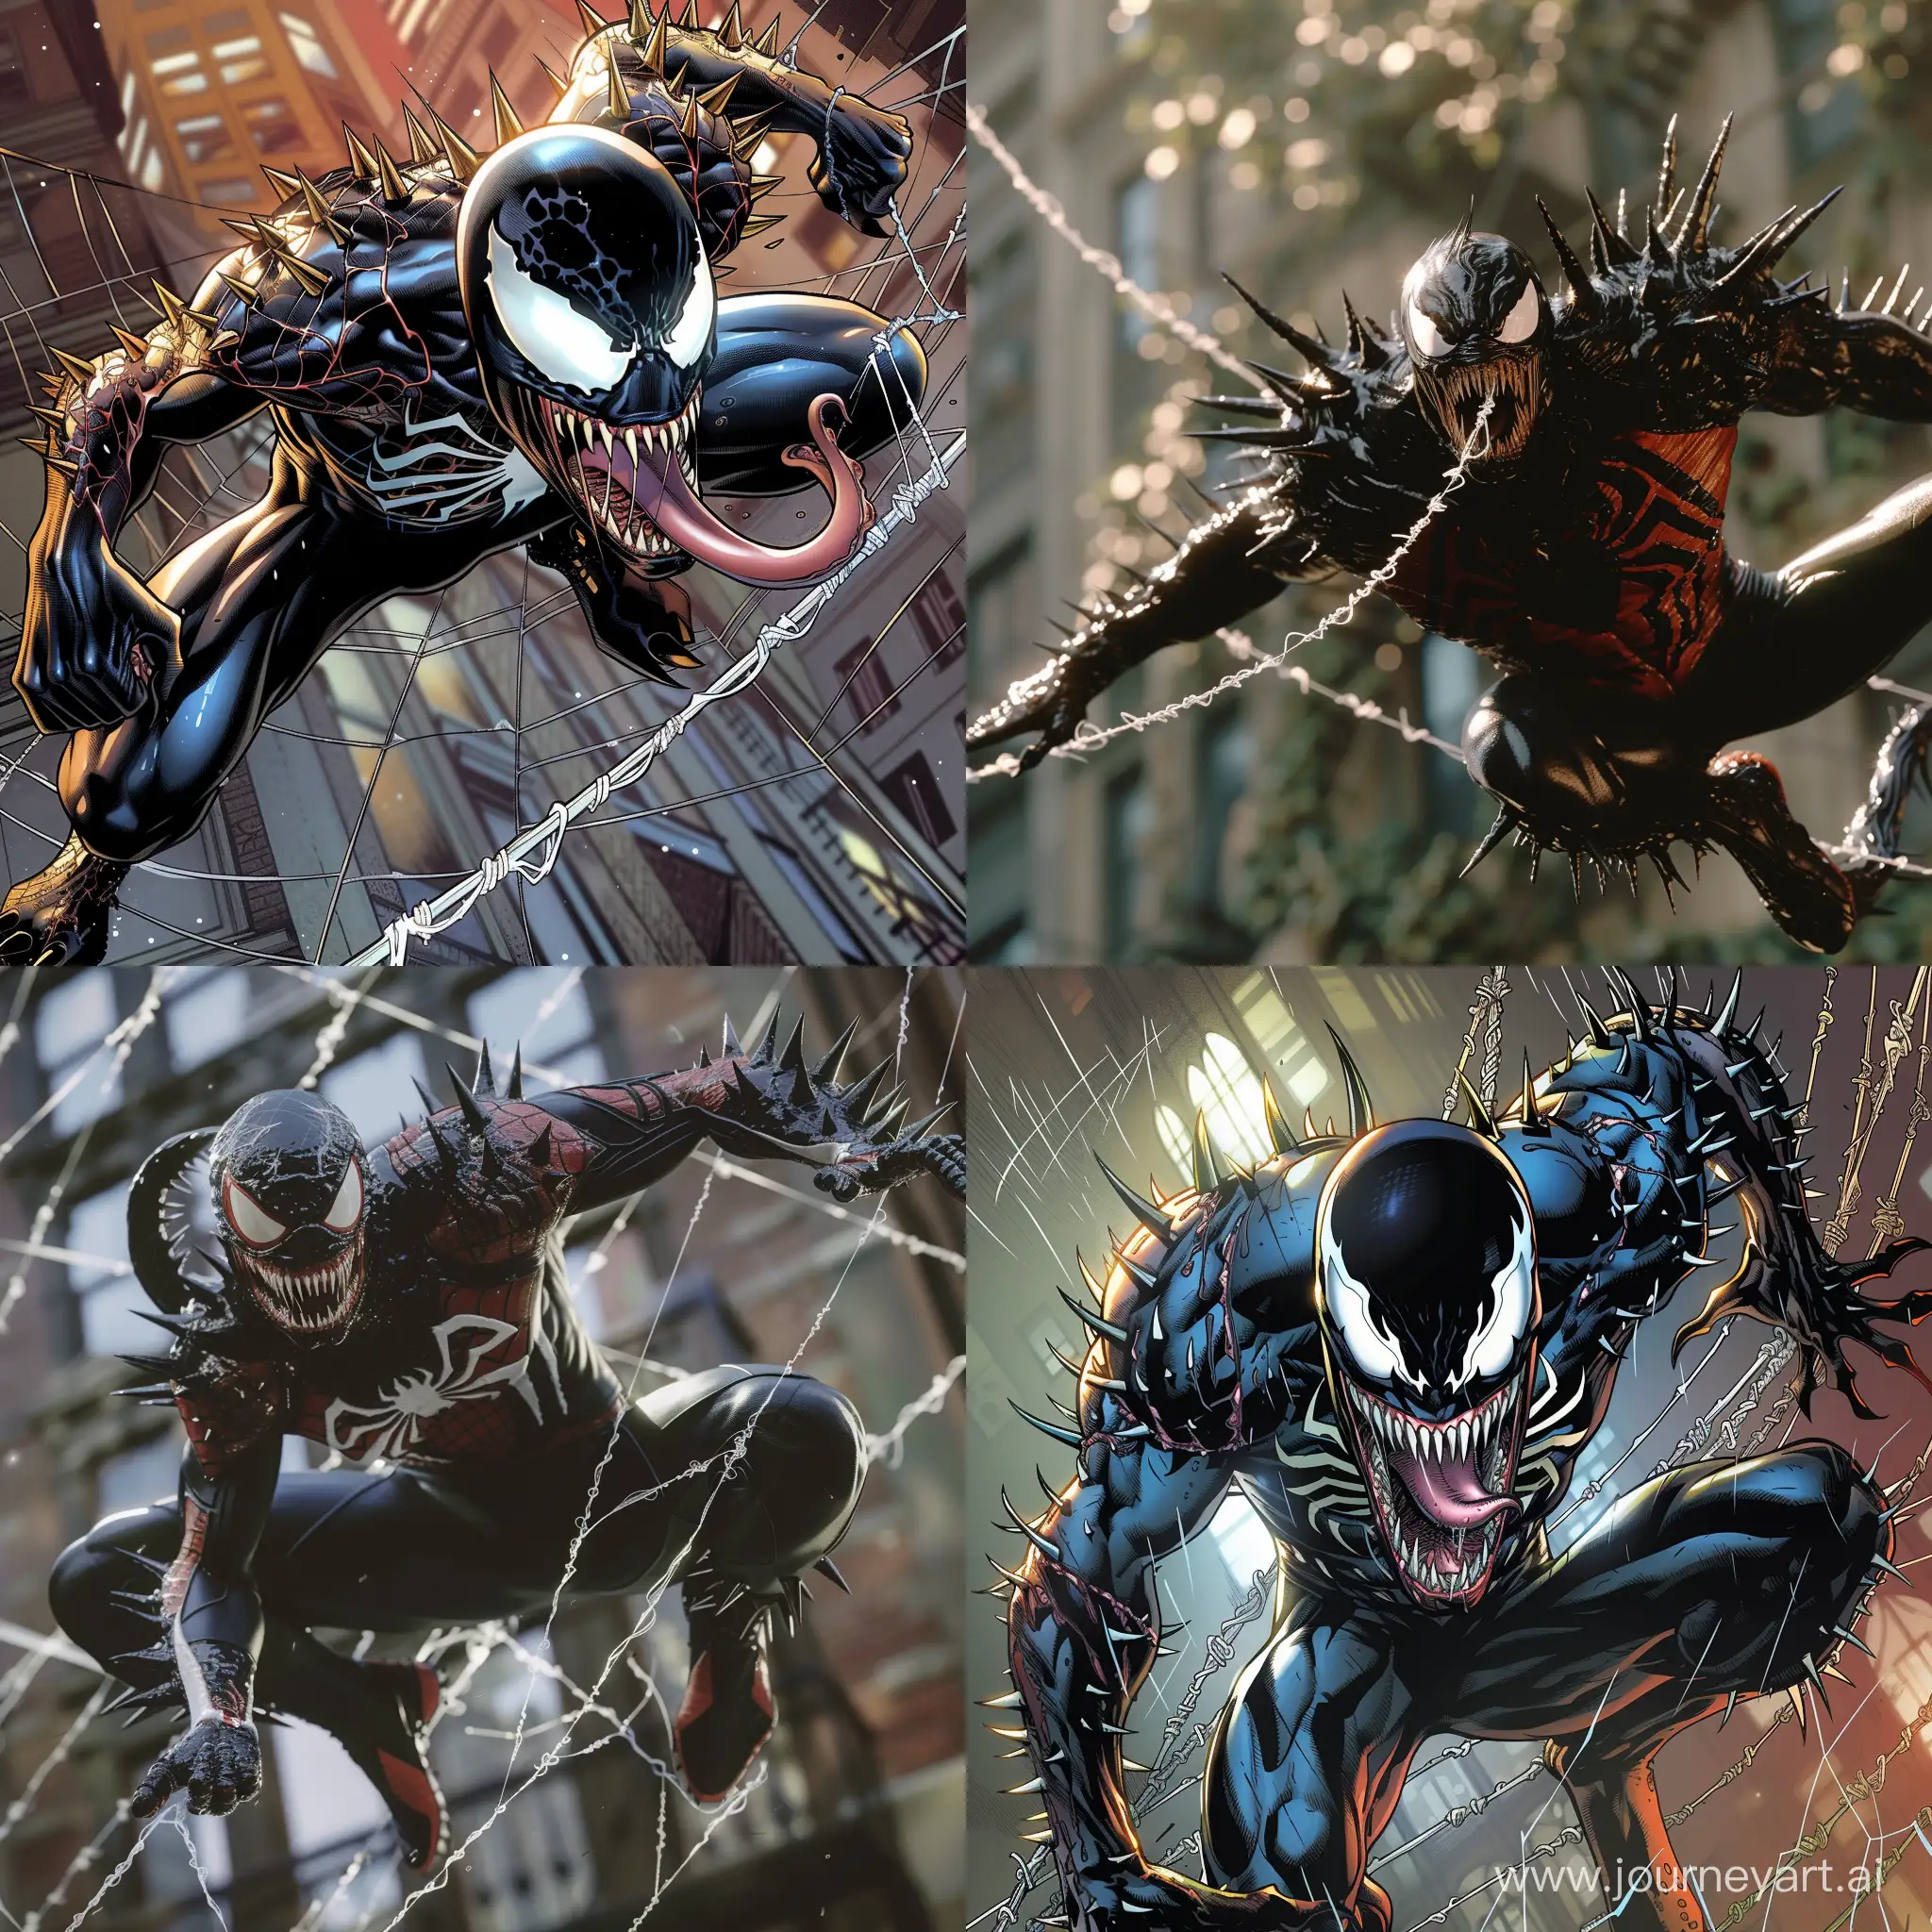 Venom-Flying-CloseUp-in-SpiderMan-Costume-on-Web